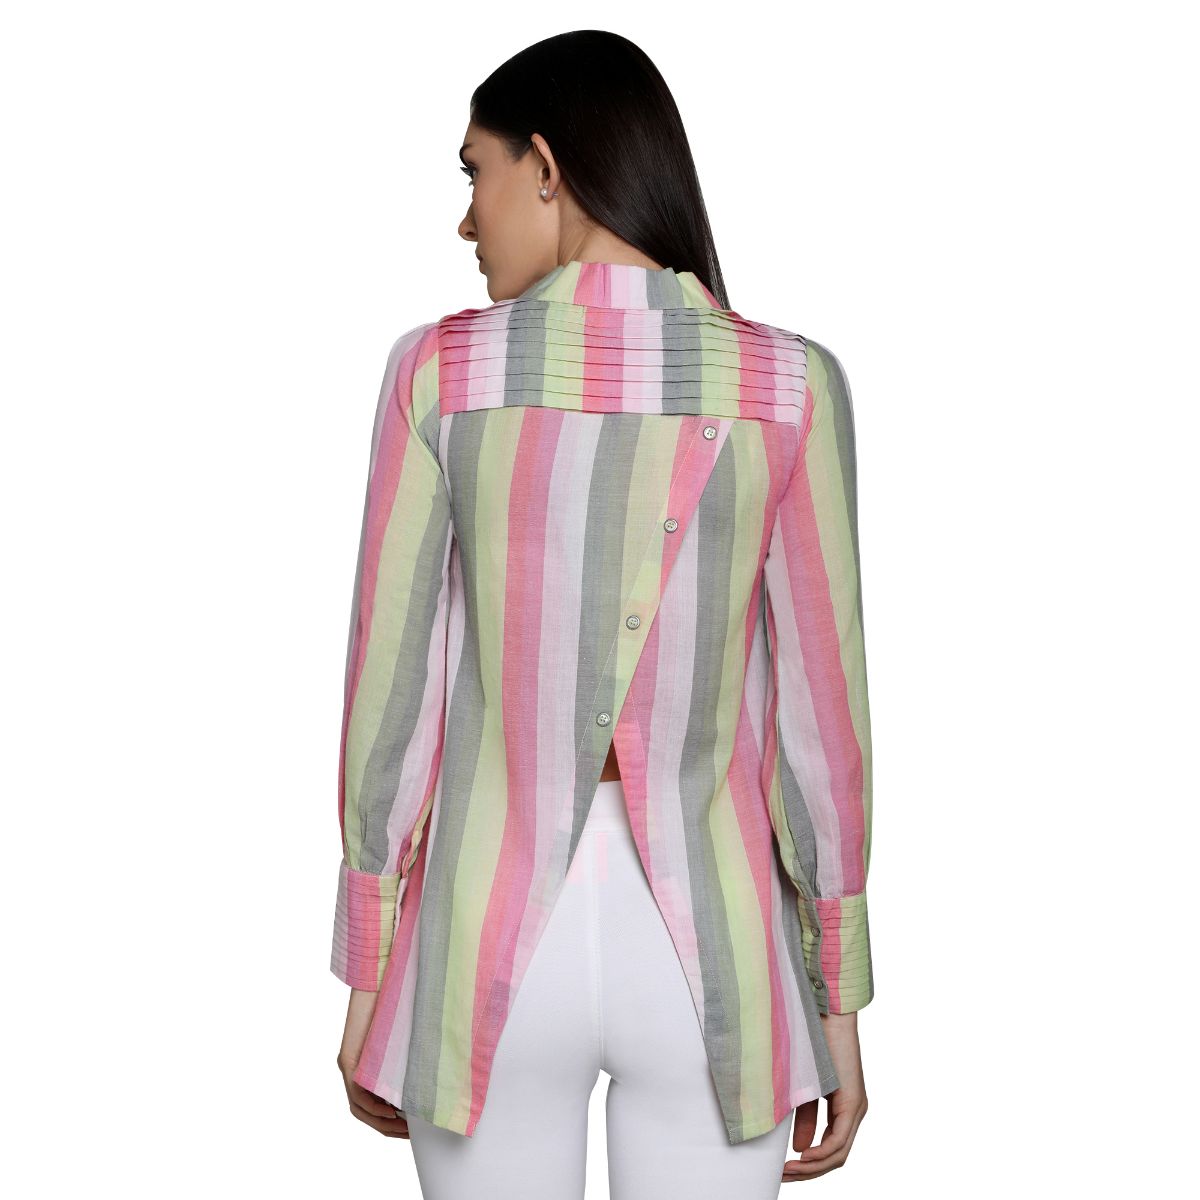 Mantra Pink Cotton stripes Stylized Shirt